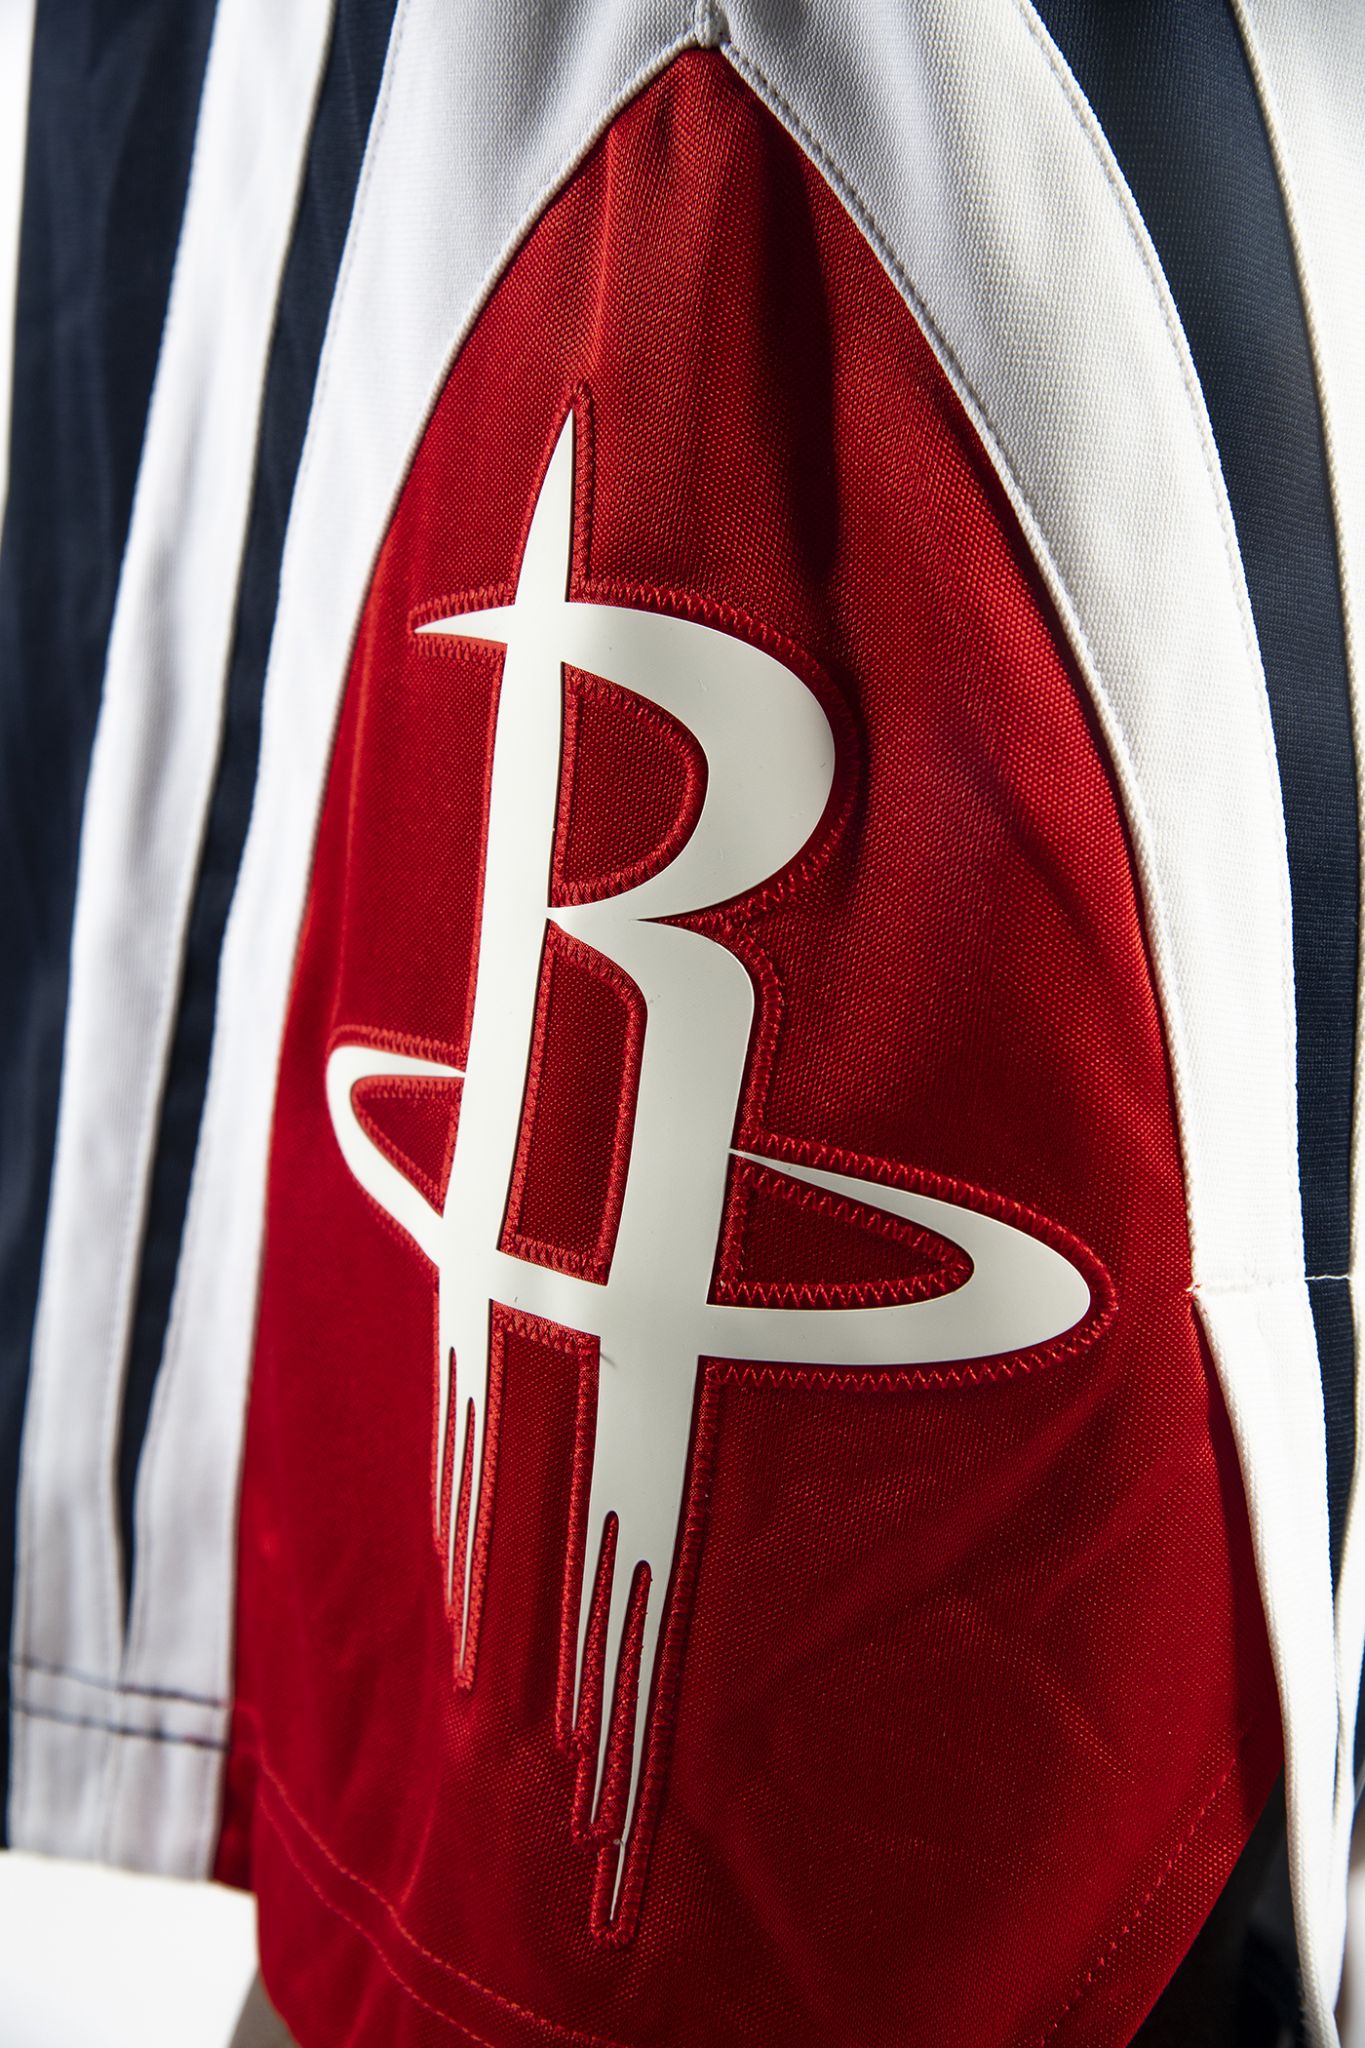 How Rockets' City Edition jerseys blend highlights from all eras